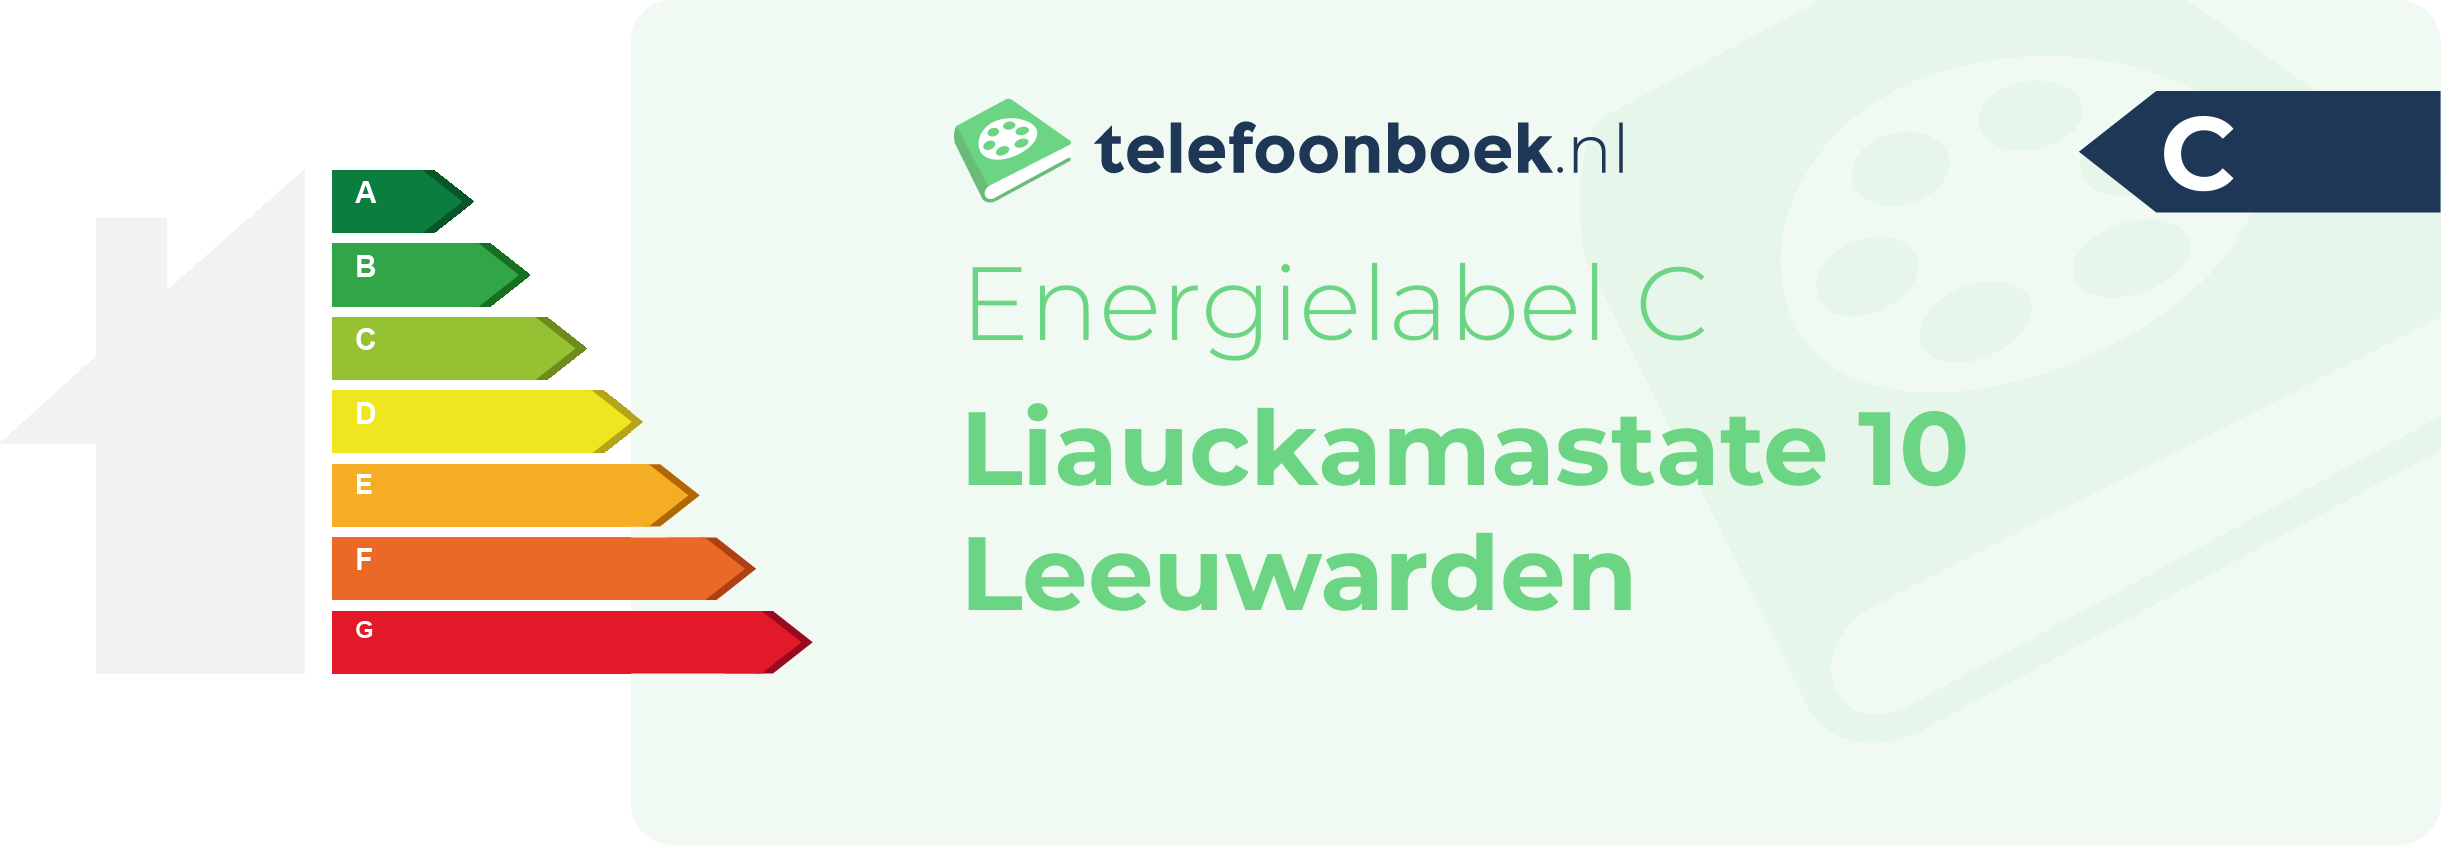 Energielabel Liauckamastate 10 Leeuwarden